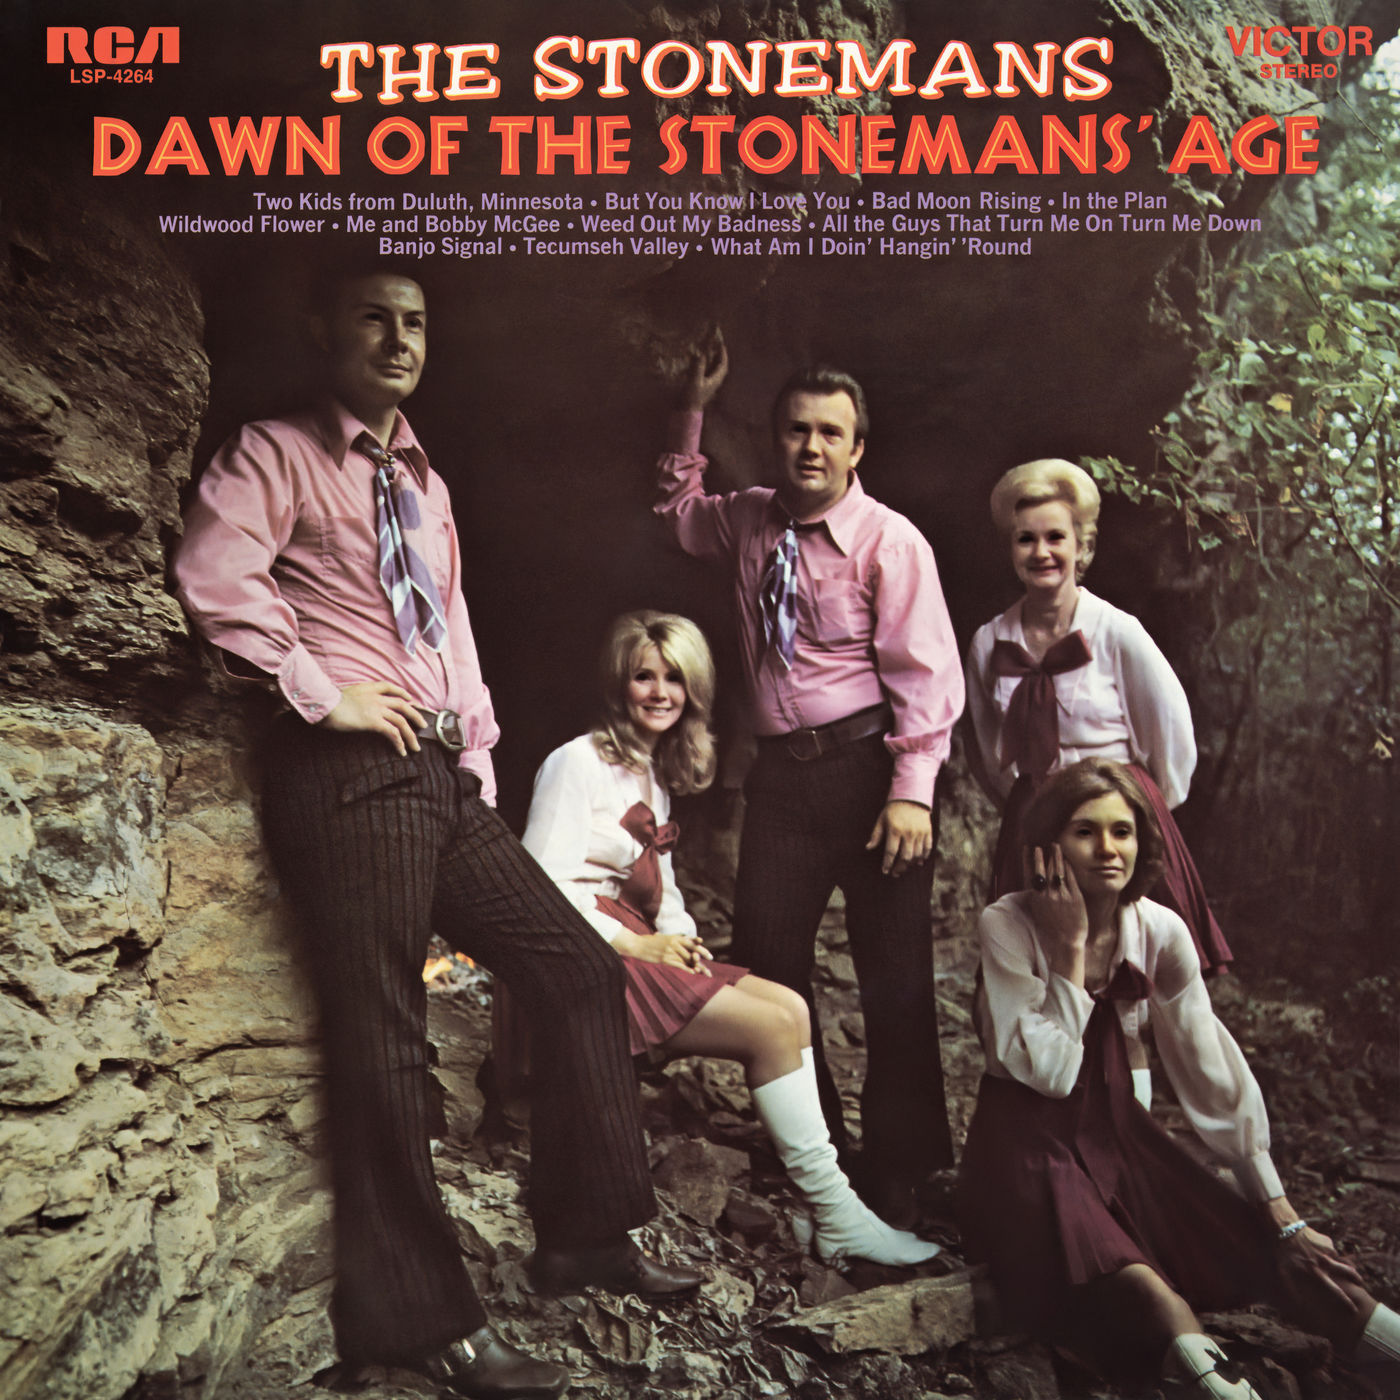 The Stonemans – Dawn of the Stonemans’ Age